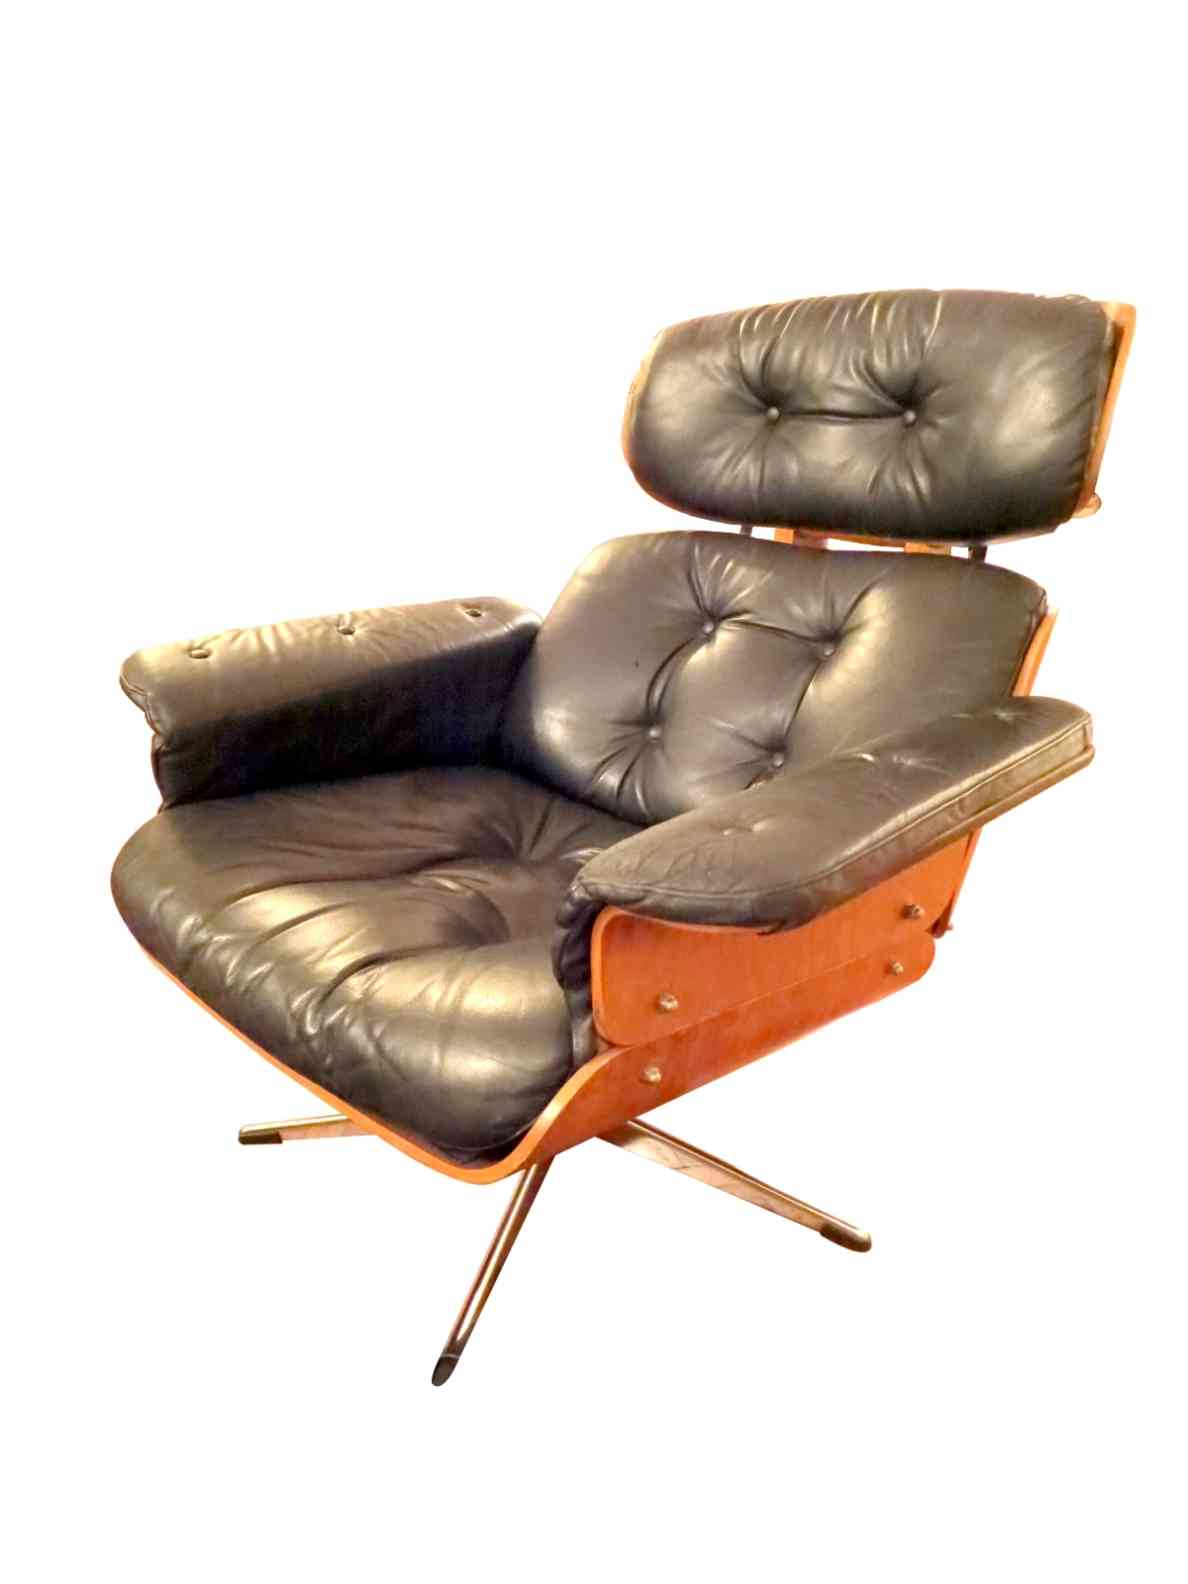 An Eames-style executive swivel chair